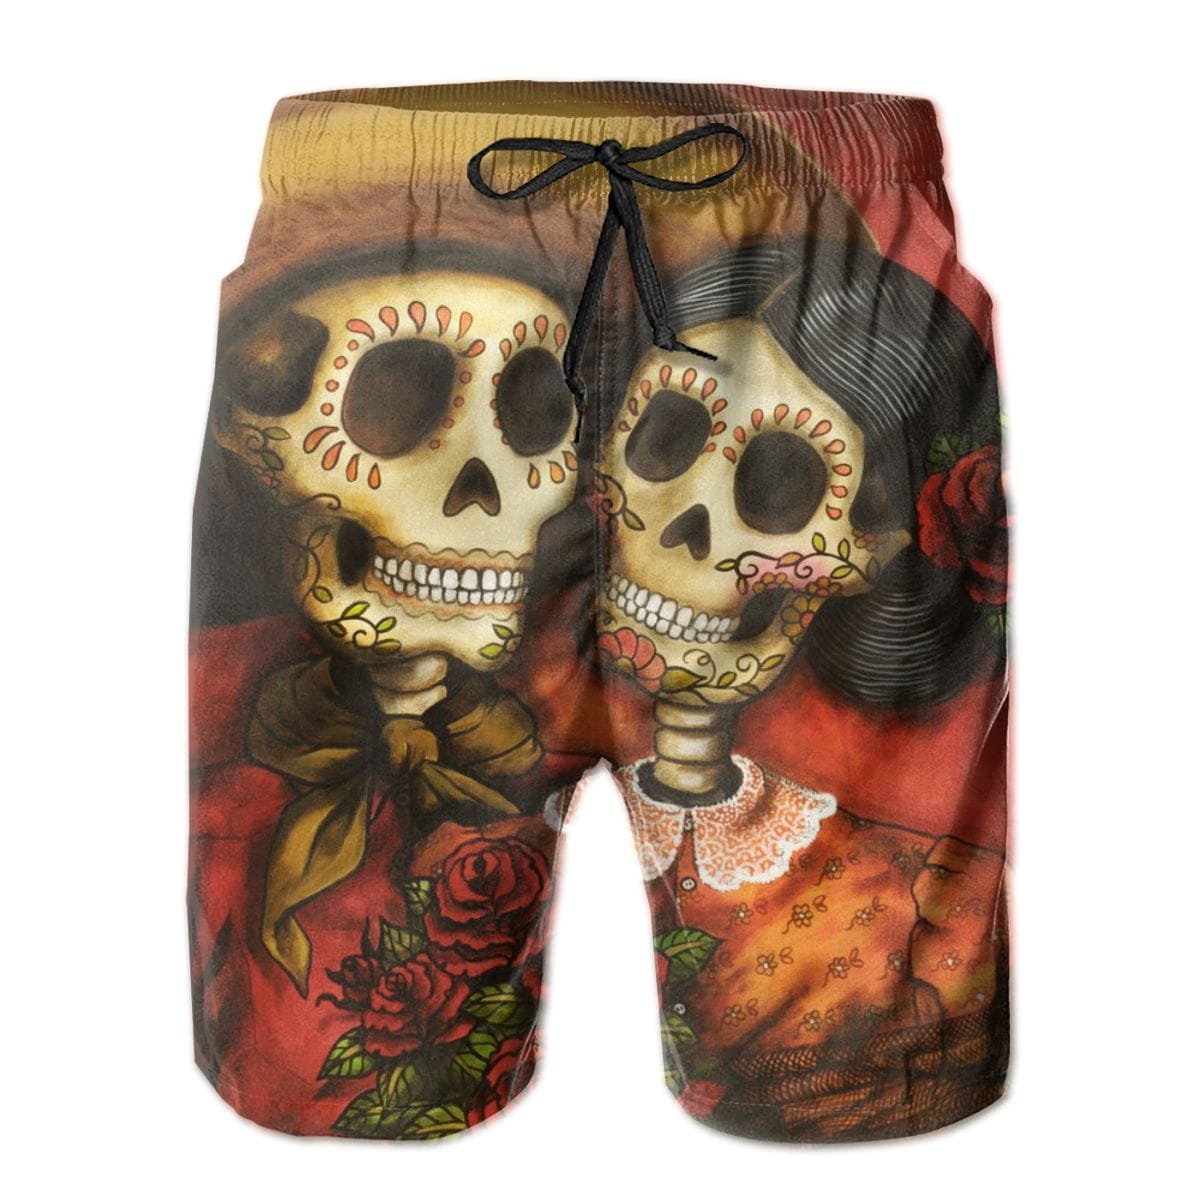 Men’s Mexican Sugar Skull Couple Swimming Shorts